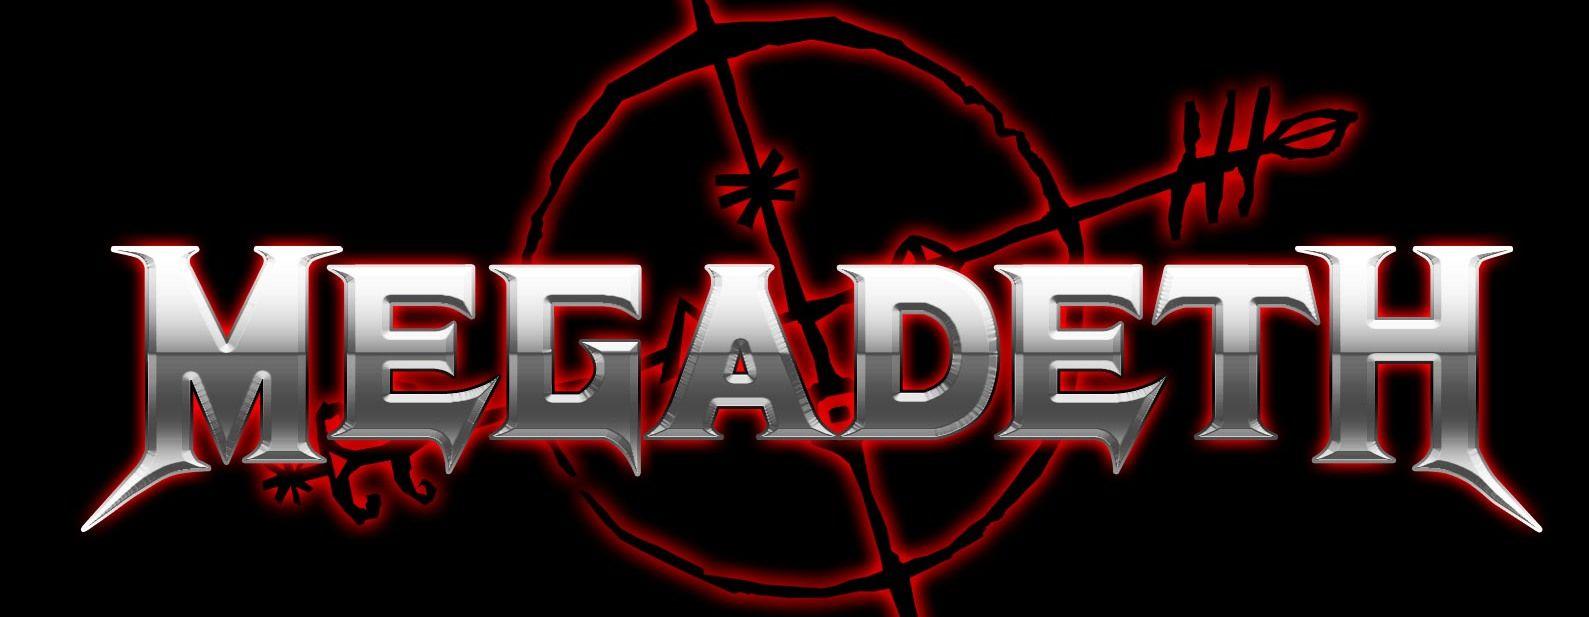 Megadeth Logo - Megadeth Logo | Best Rock Musical | WordPress Music Blog